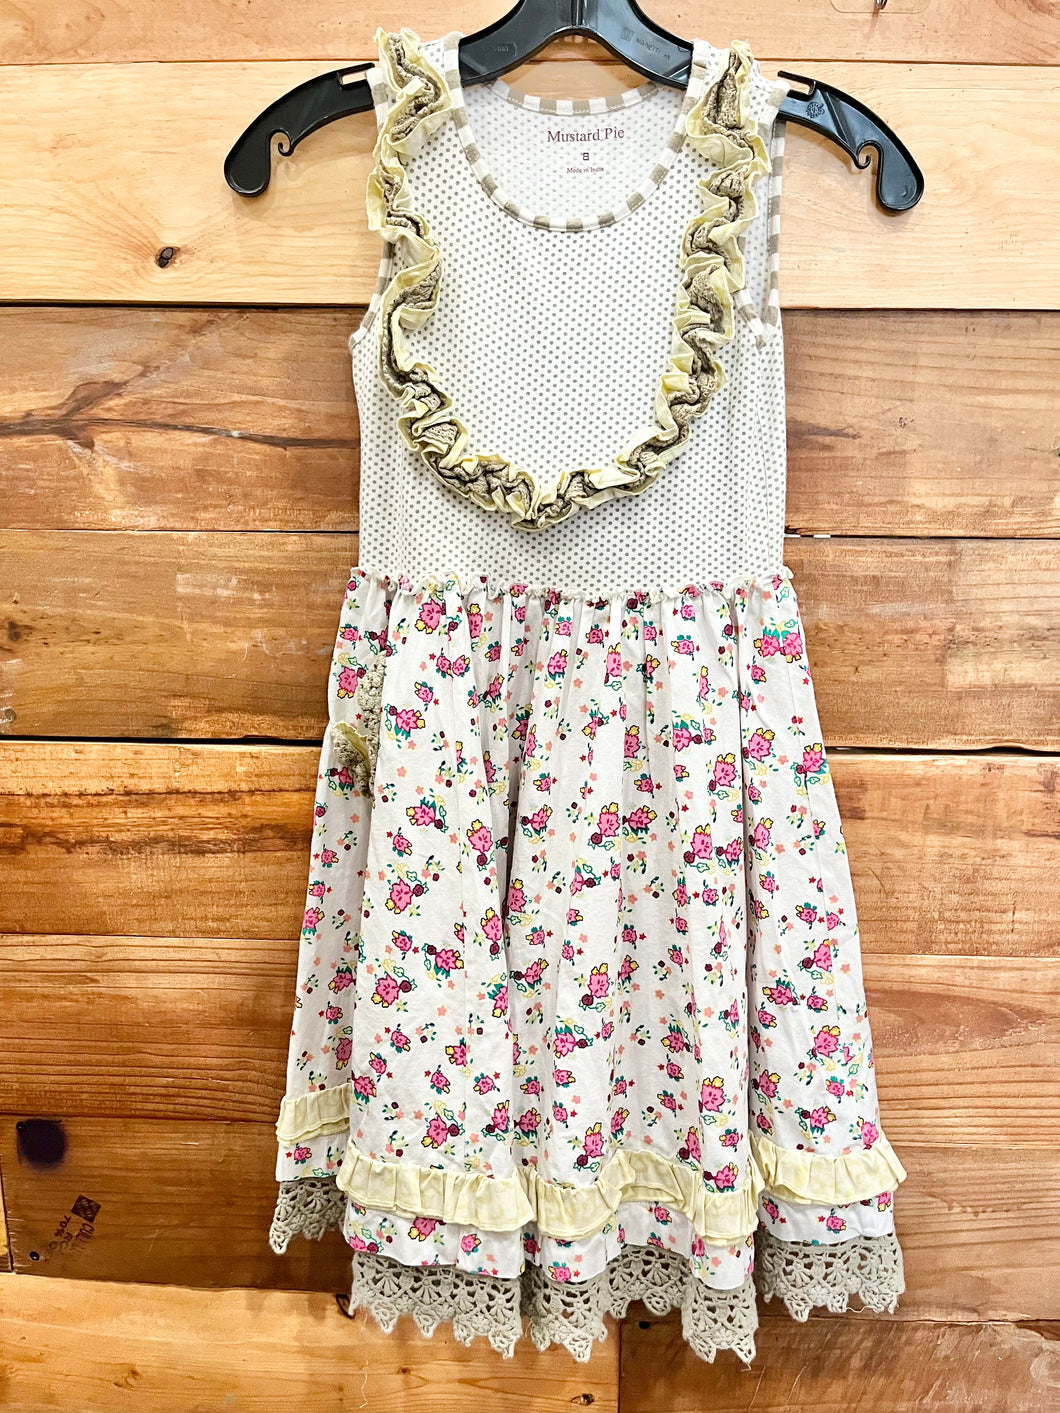 Mustard Pie Polka Dot Flower Dress Size 8